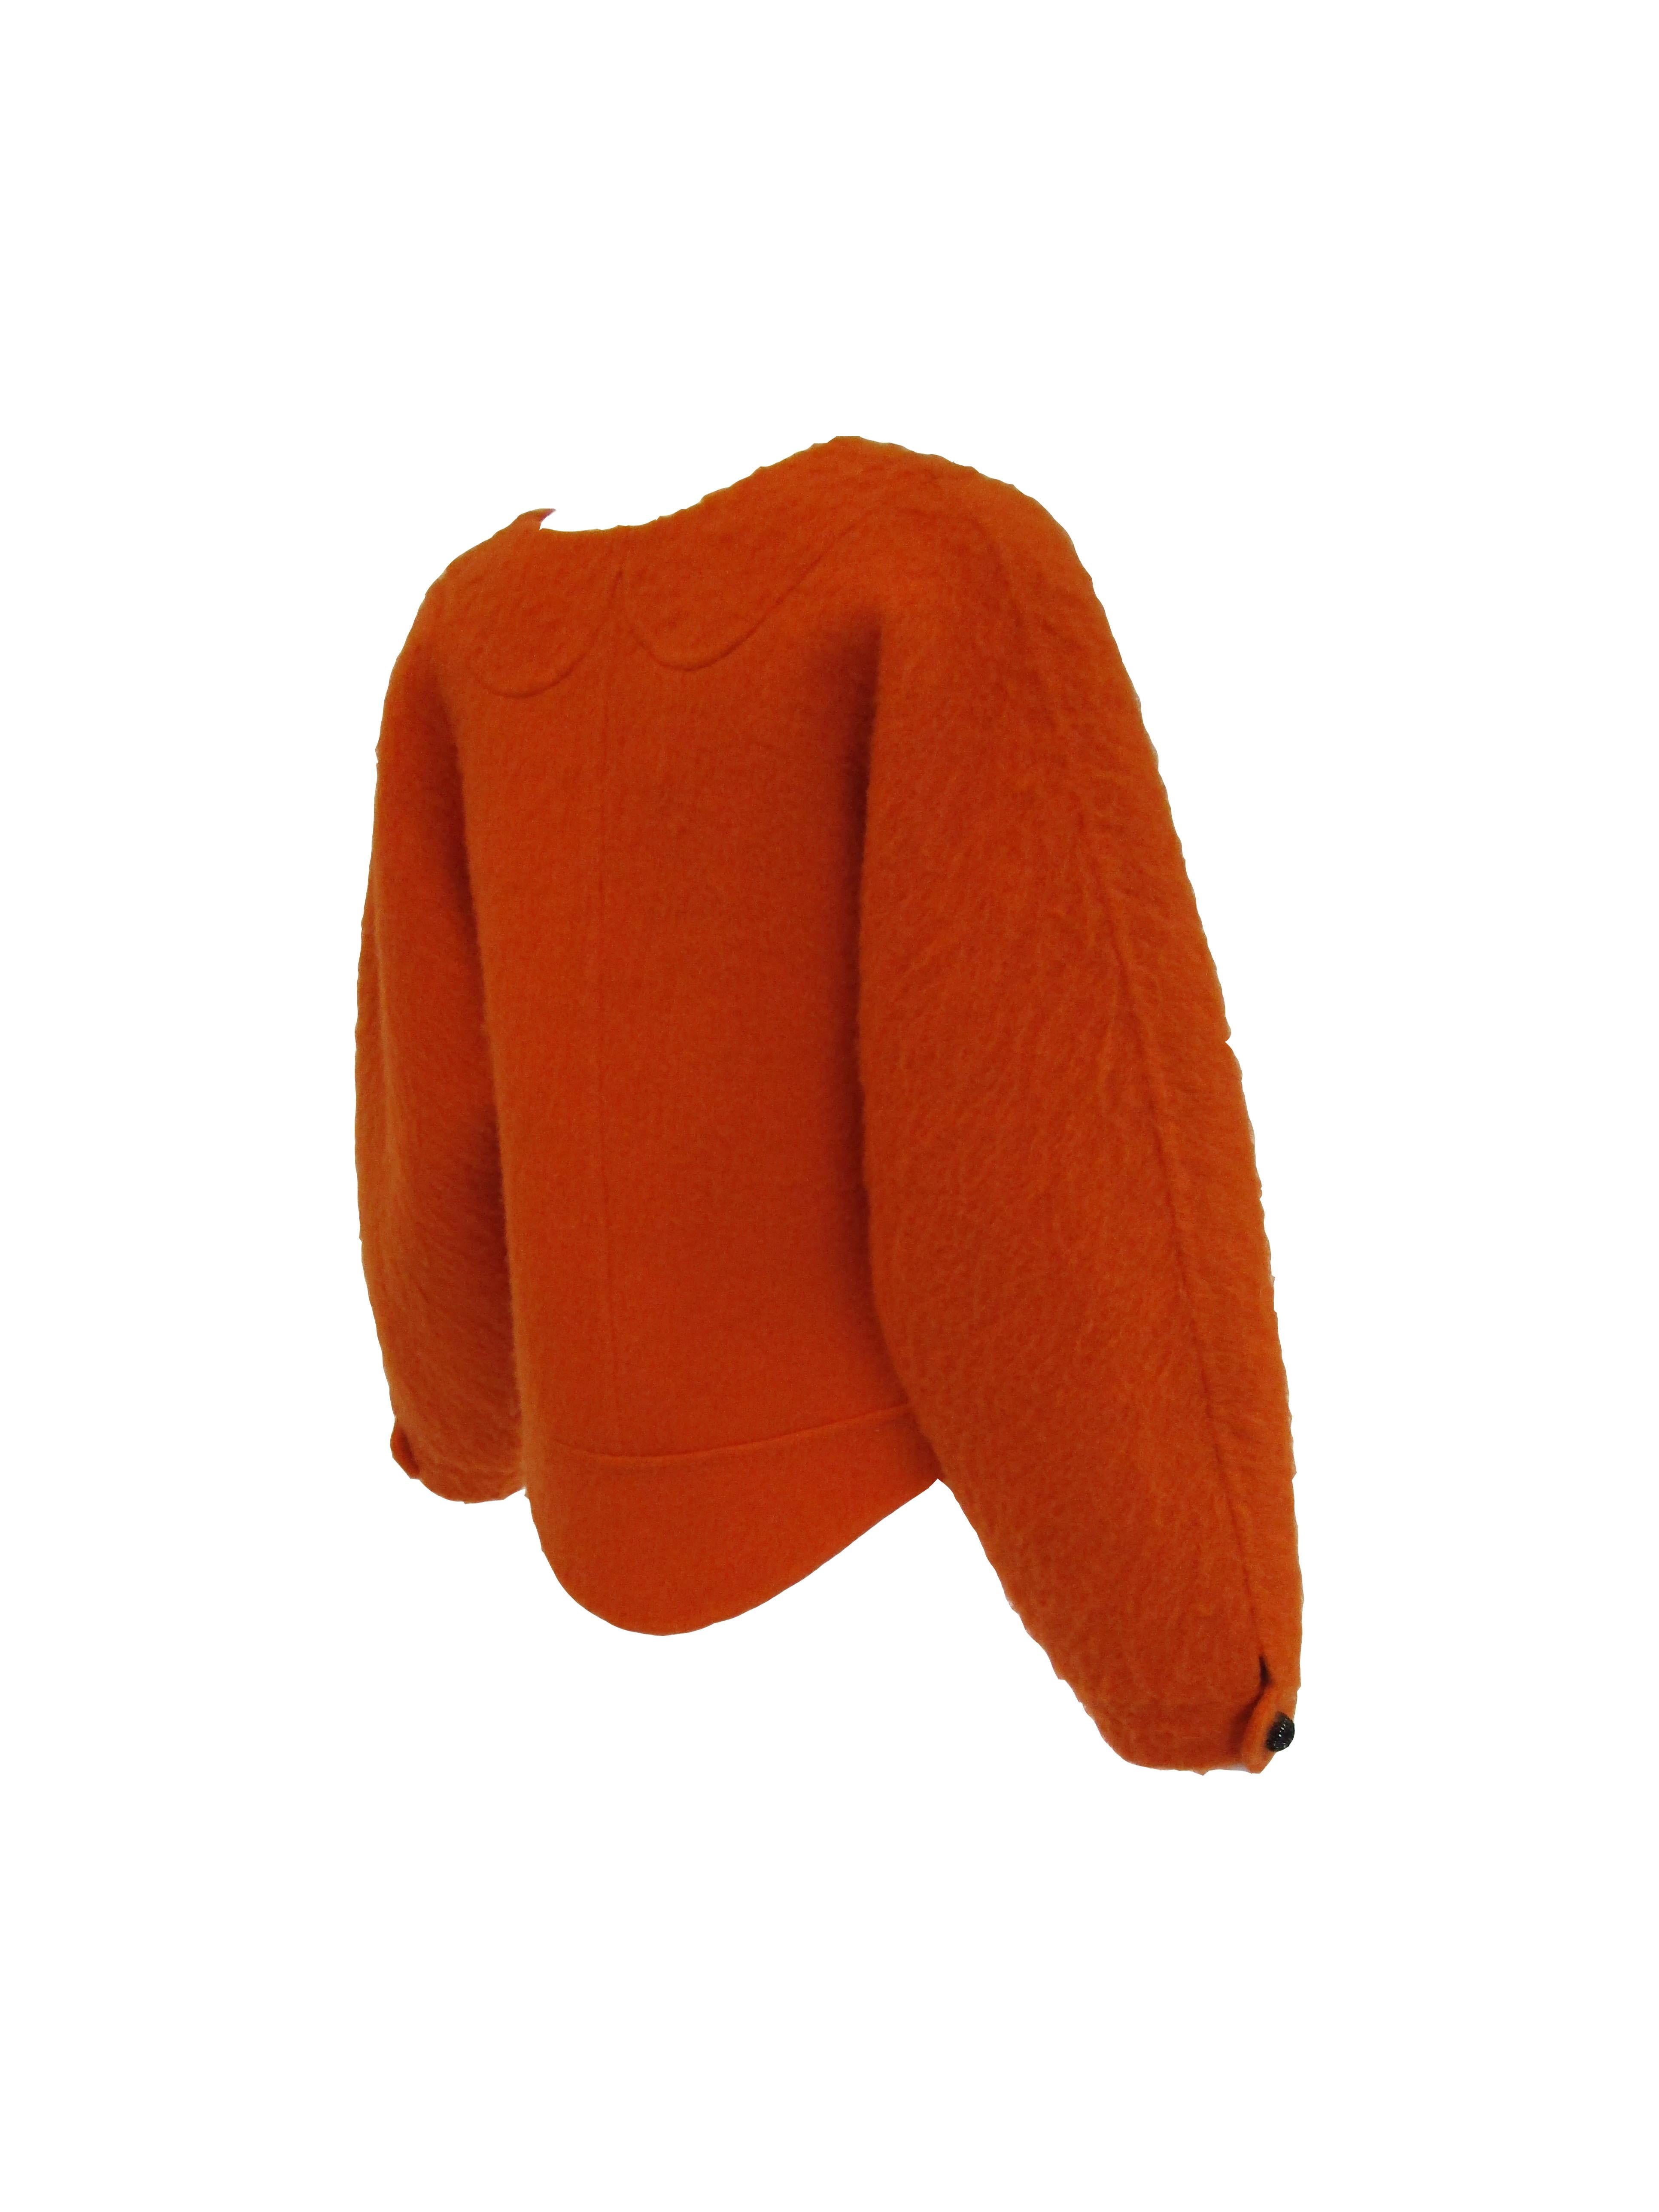  1990s Geoffery Beene Bright Orange Mohair Jacket - Cropped  For Sale 4